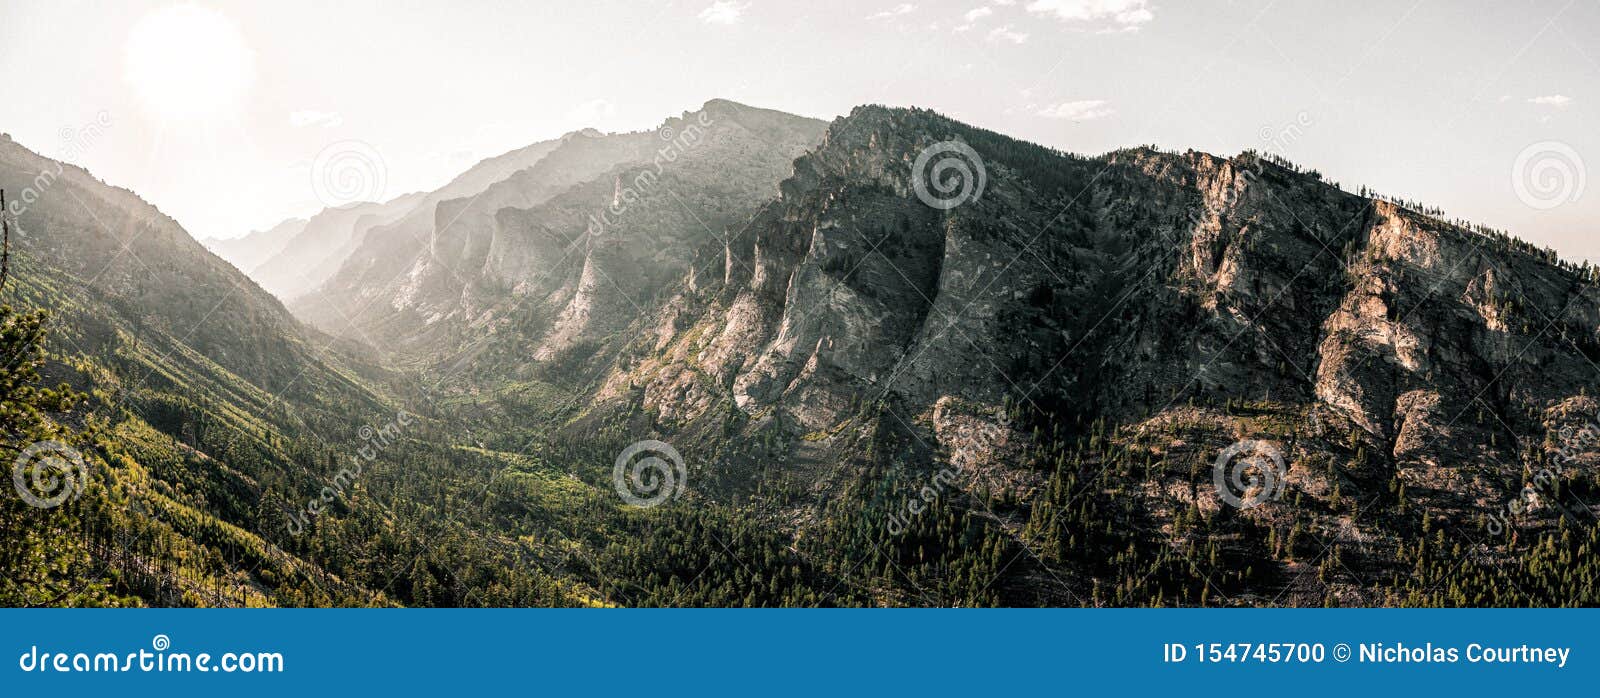 the beautiful bitterroot mountains of montana.